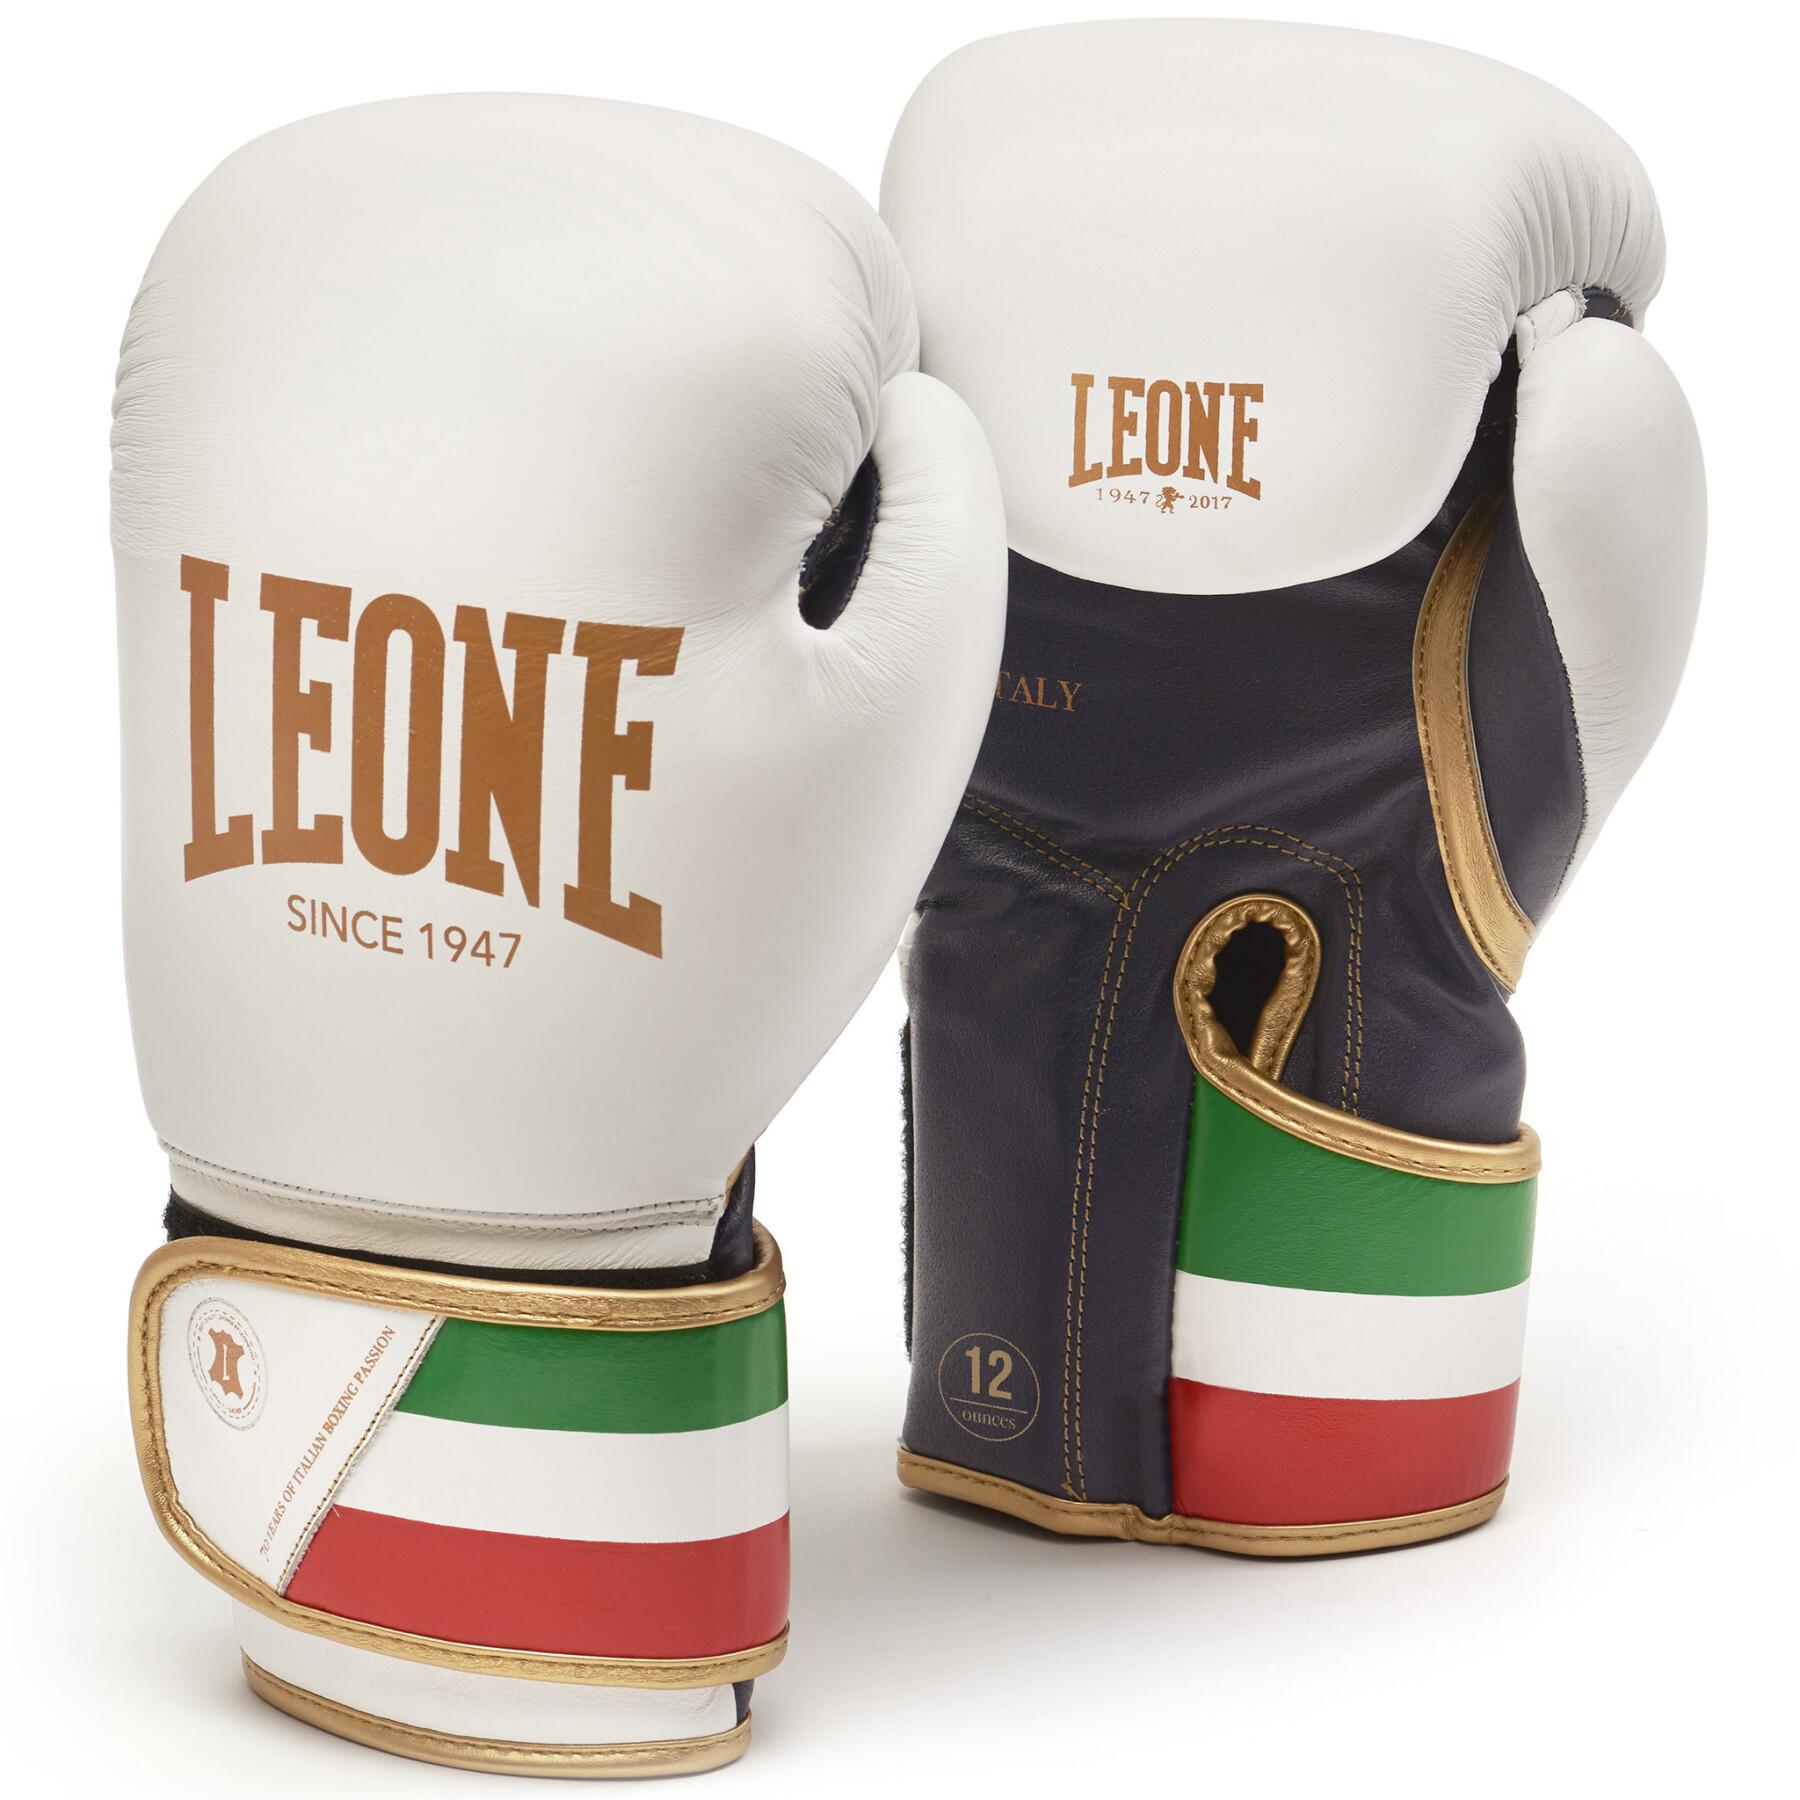 Luvas de boxe Leone Italy 14 oz